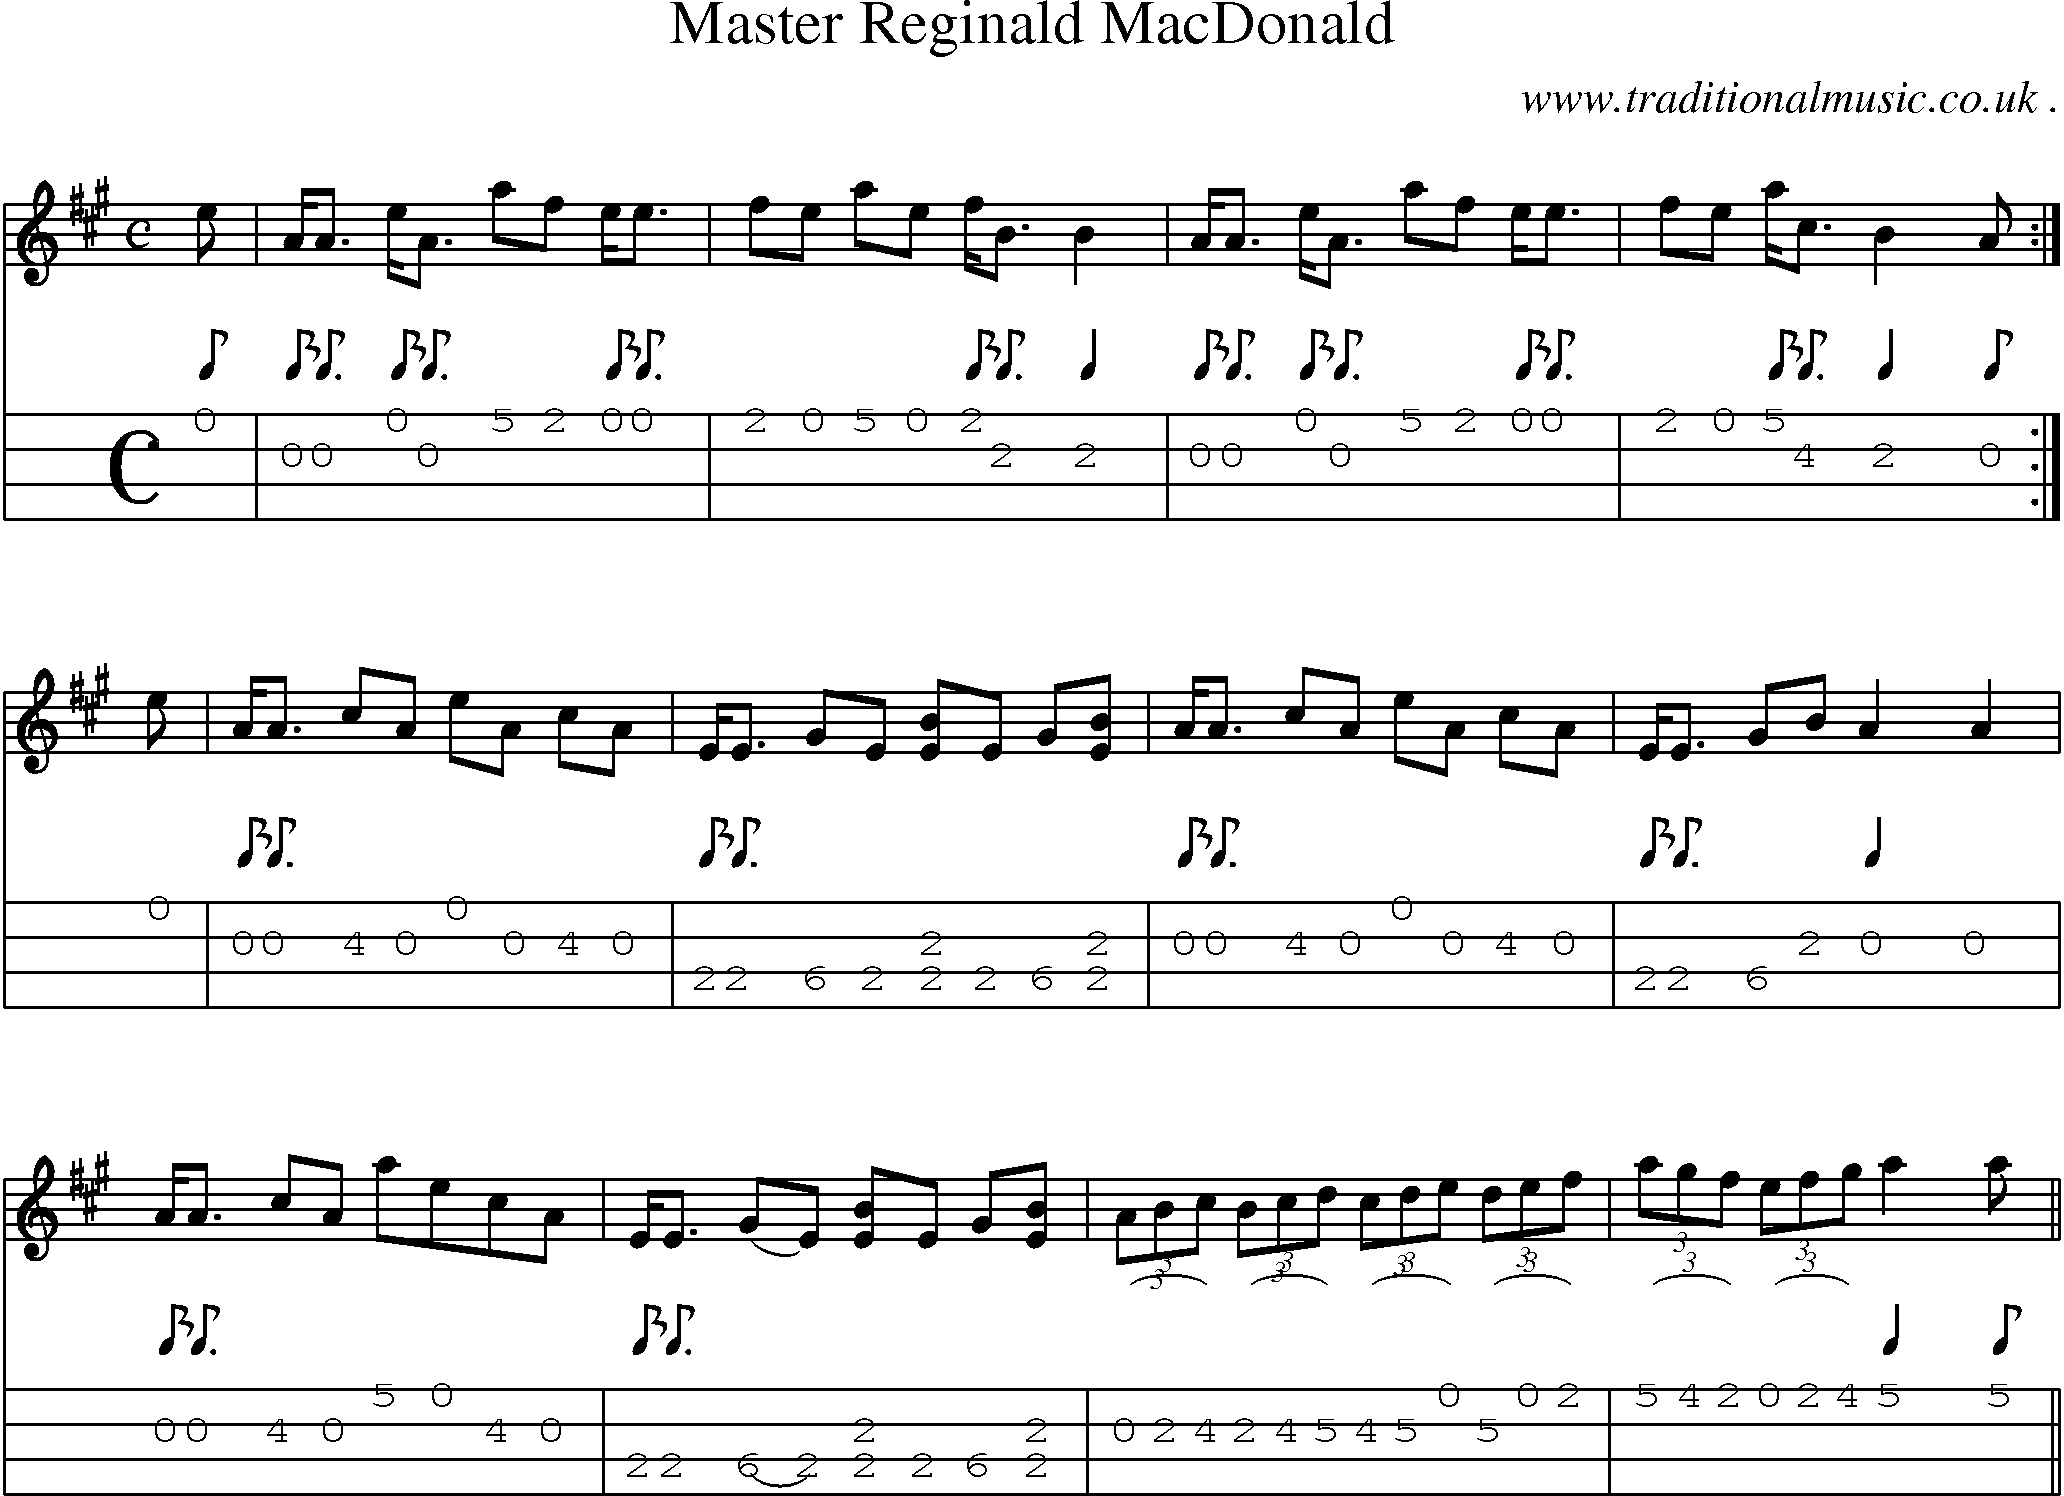 Sheet-music  score, Chords and Mandolin Tabs for Master Reginald Macdonald